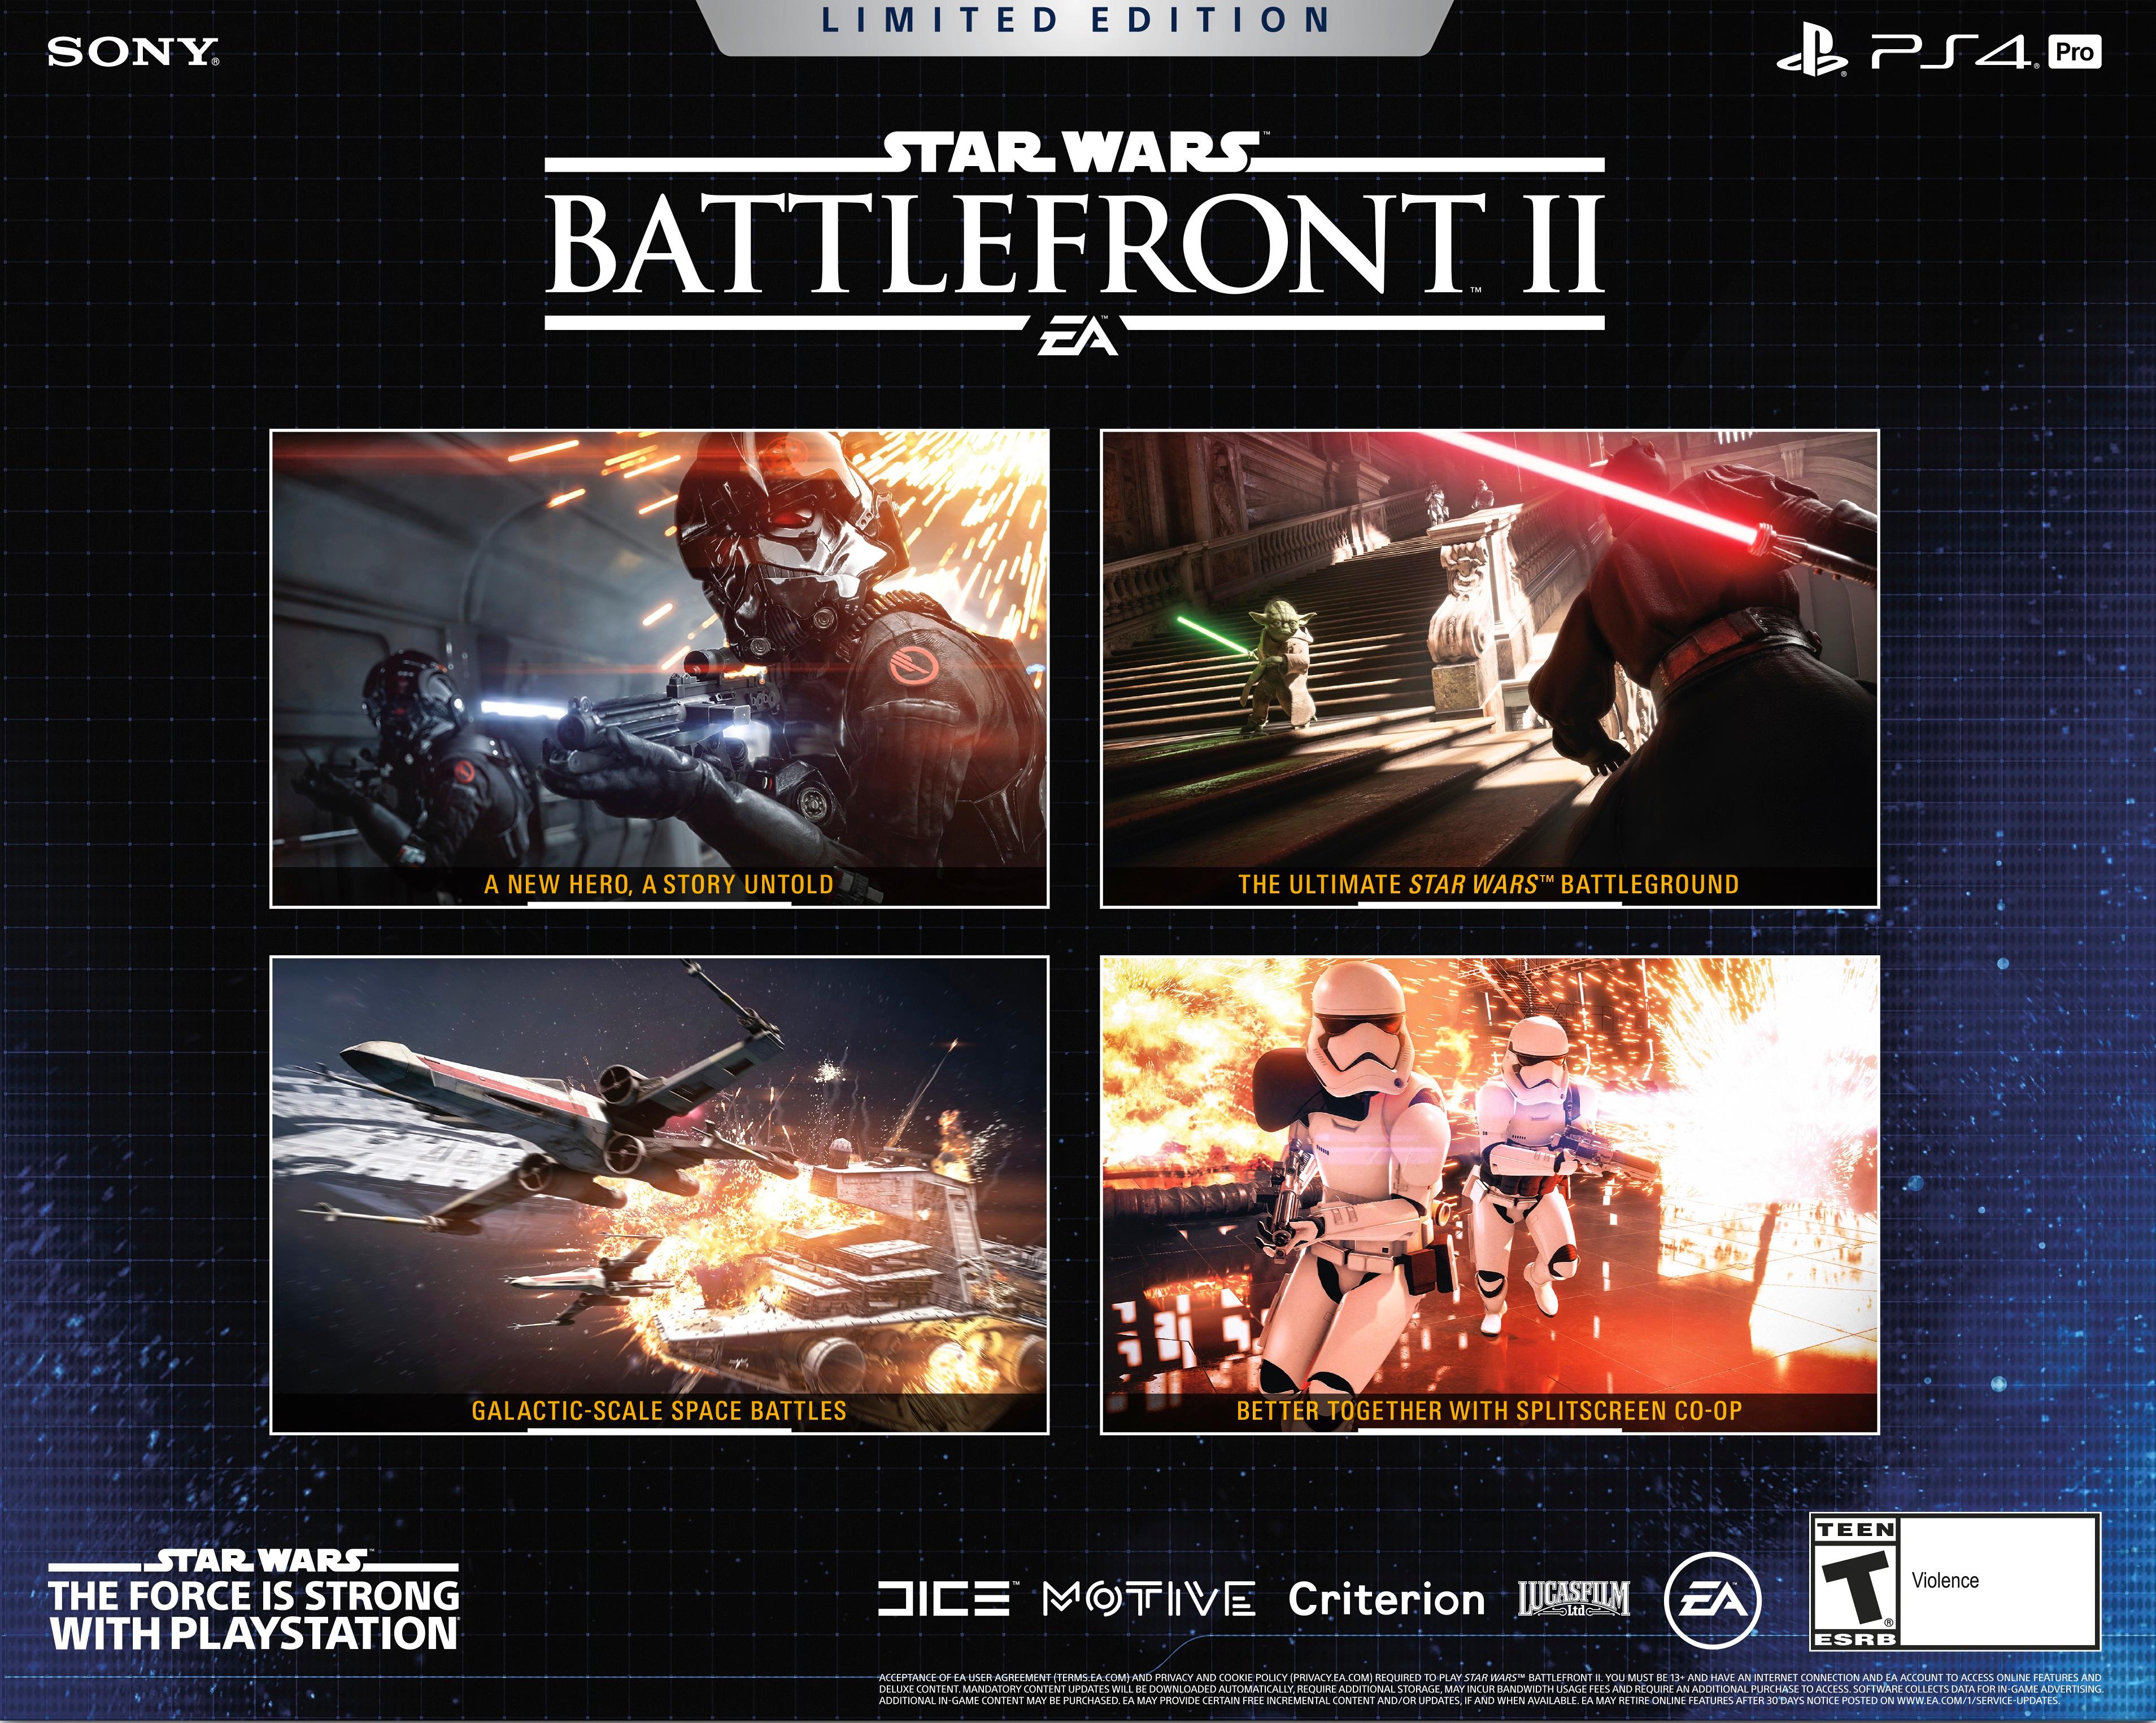 ps4 pro battlefront ii limited edition bundle